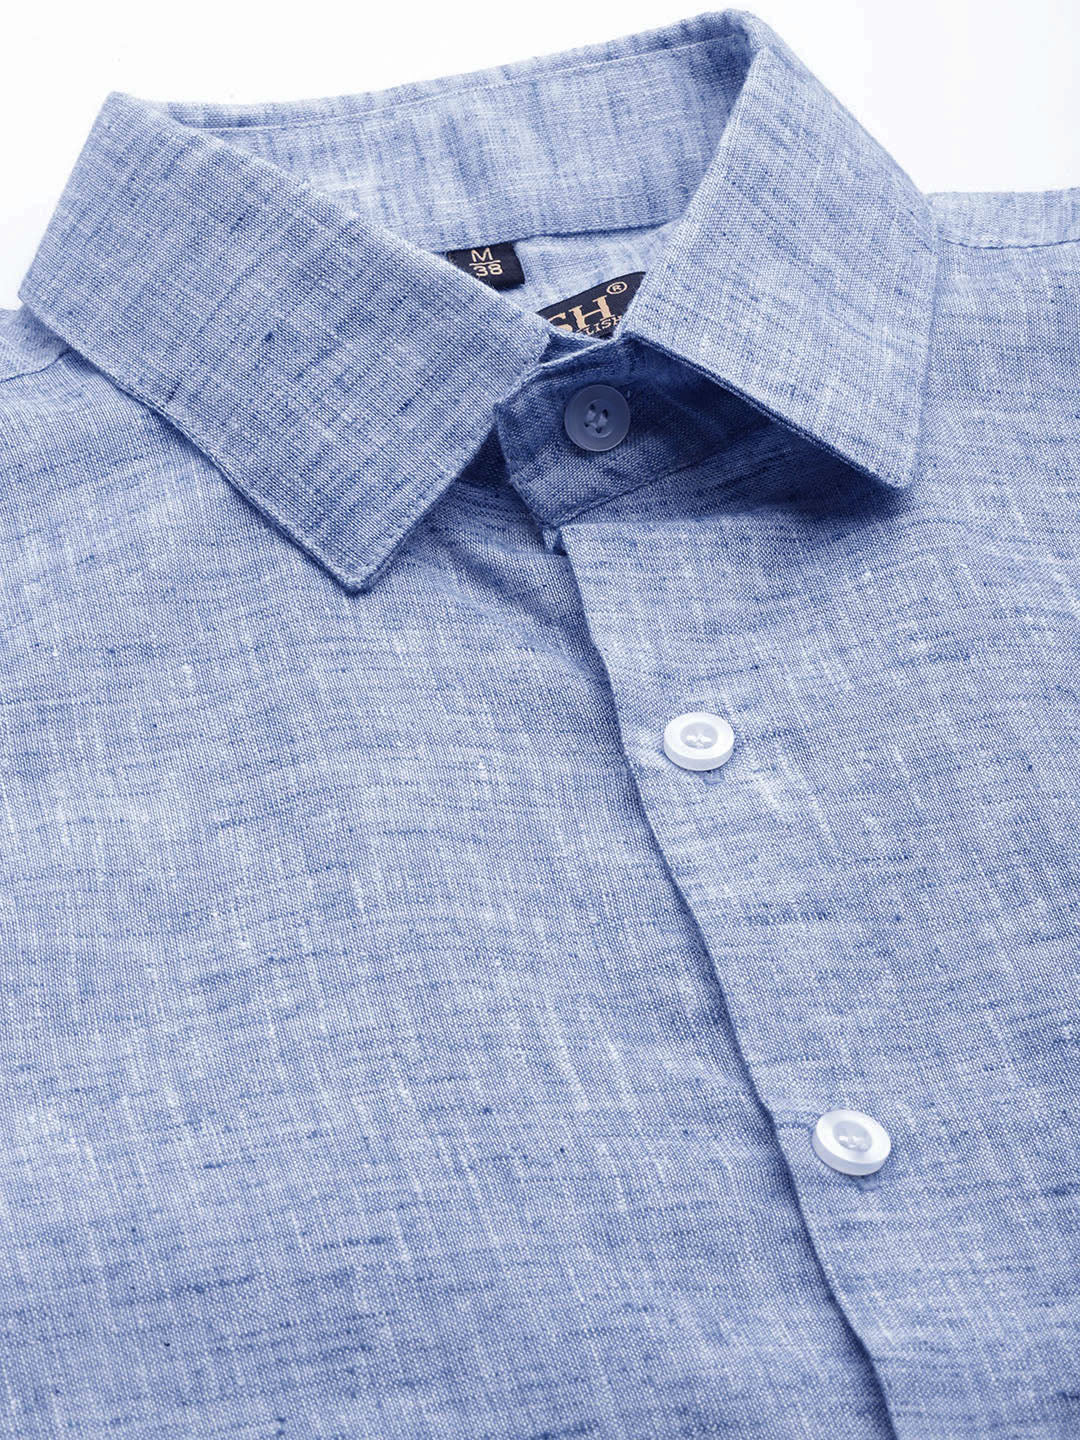 Jainish Blue Men's Solid Cotton Formal Shirt